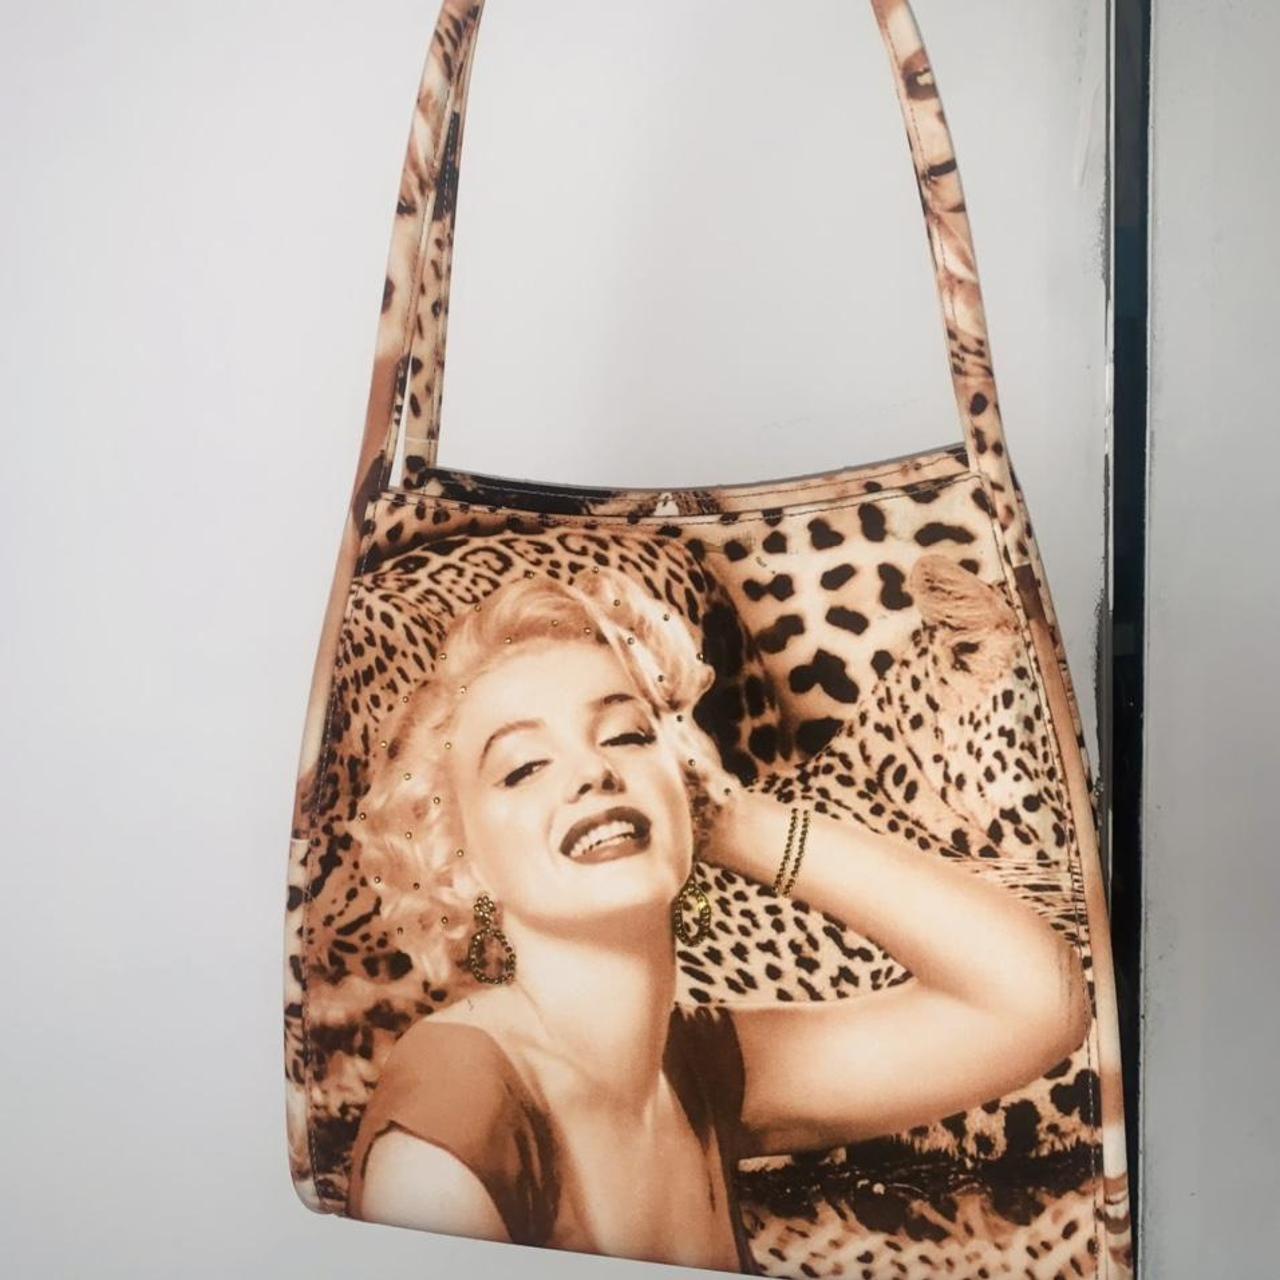 Brand new vintage authentic, MARILYN MONROE handbag